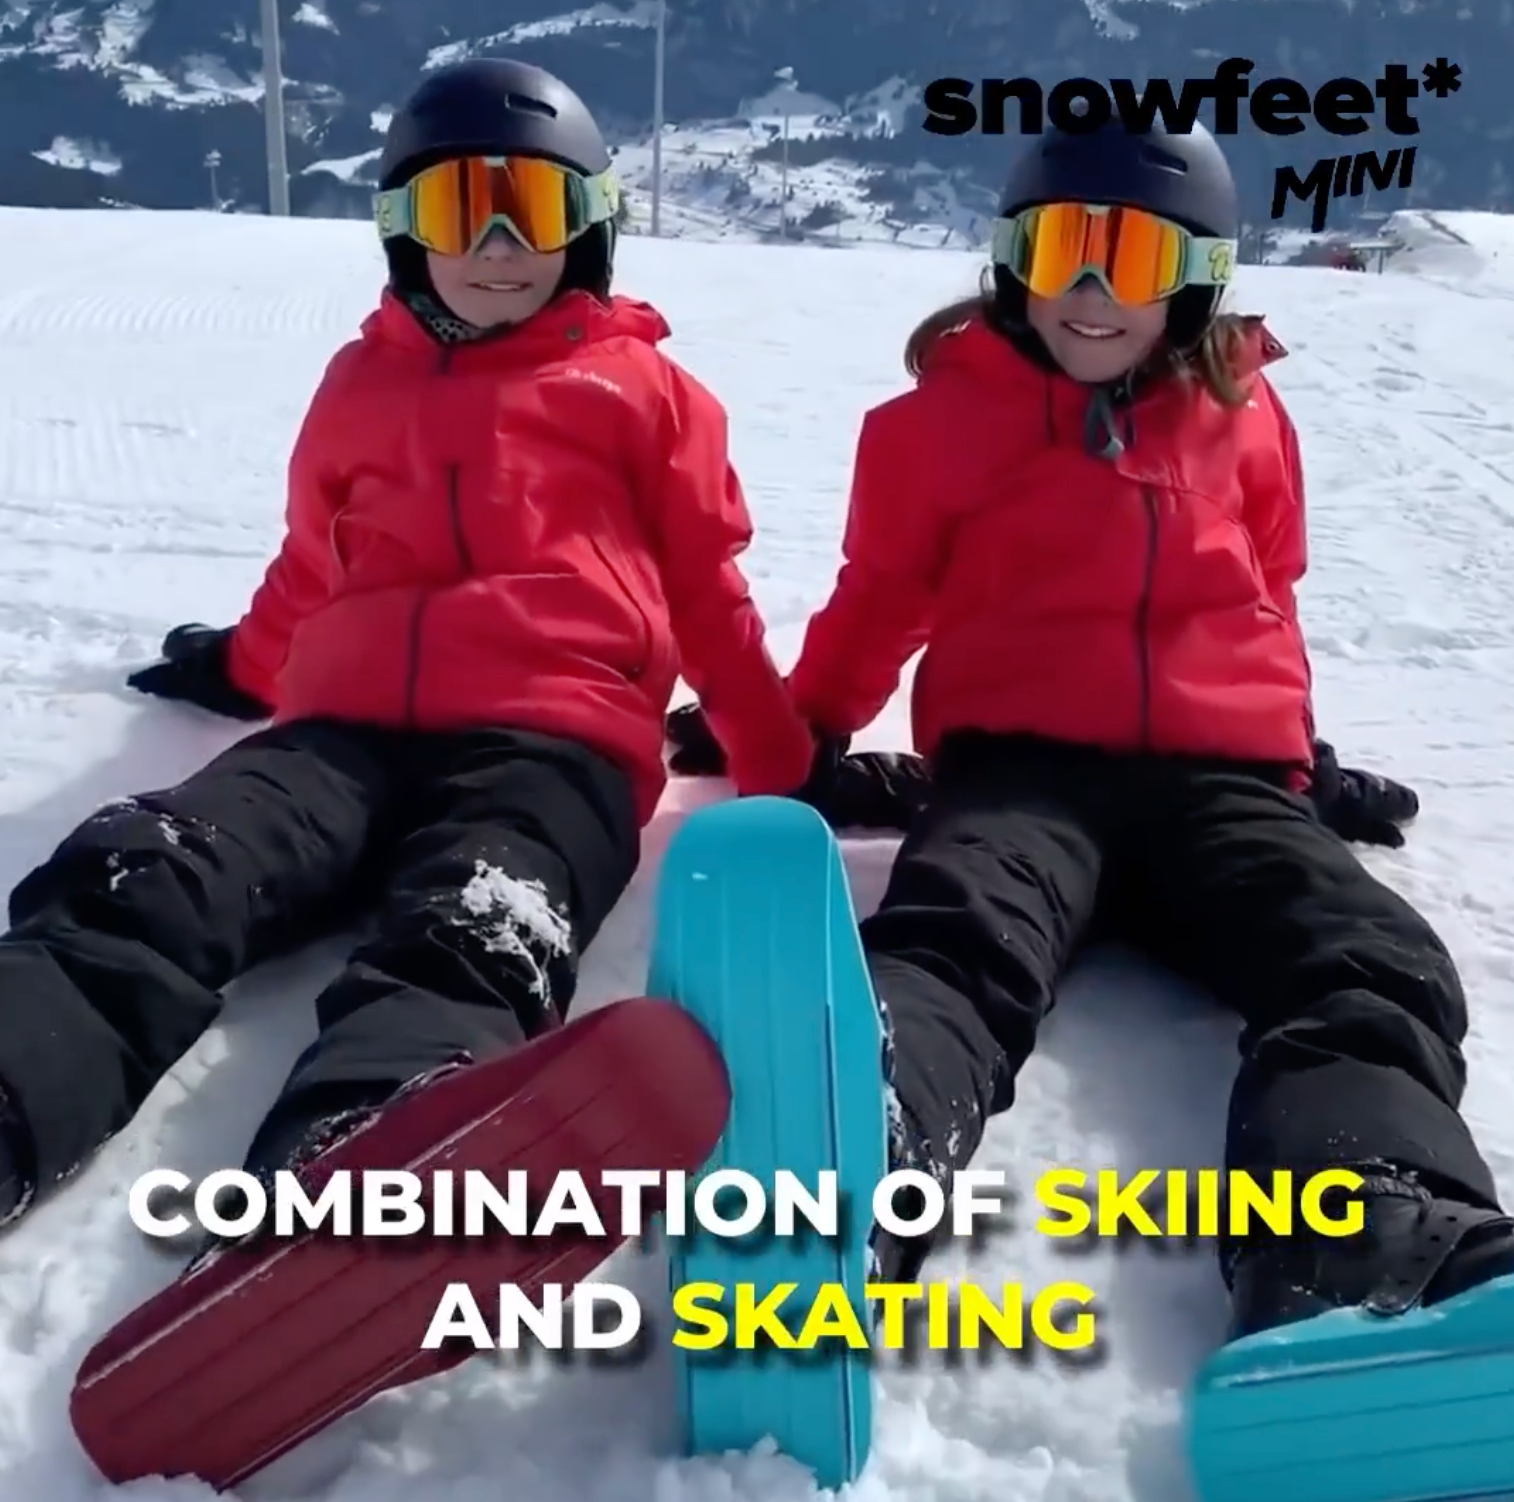 Mini ski adulte homme et femme, patinette ski court Snowblade